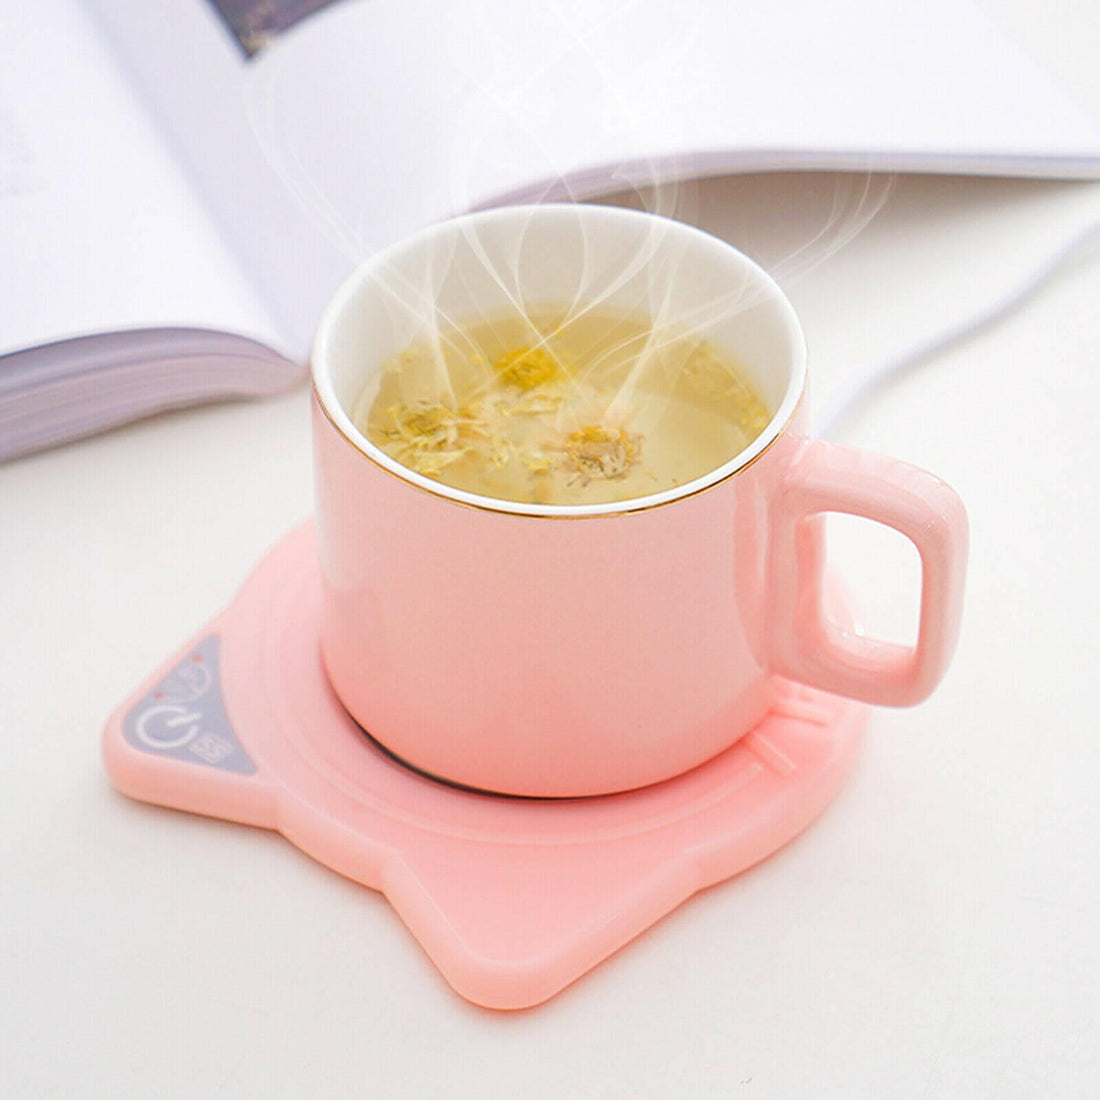 Coffee Mug Warmer Pad, Coffee Mug with Heating Pad – ICONIQ Store